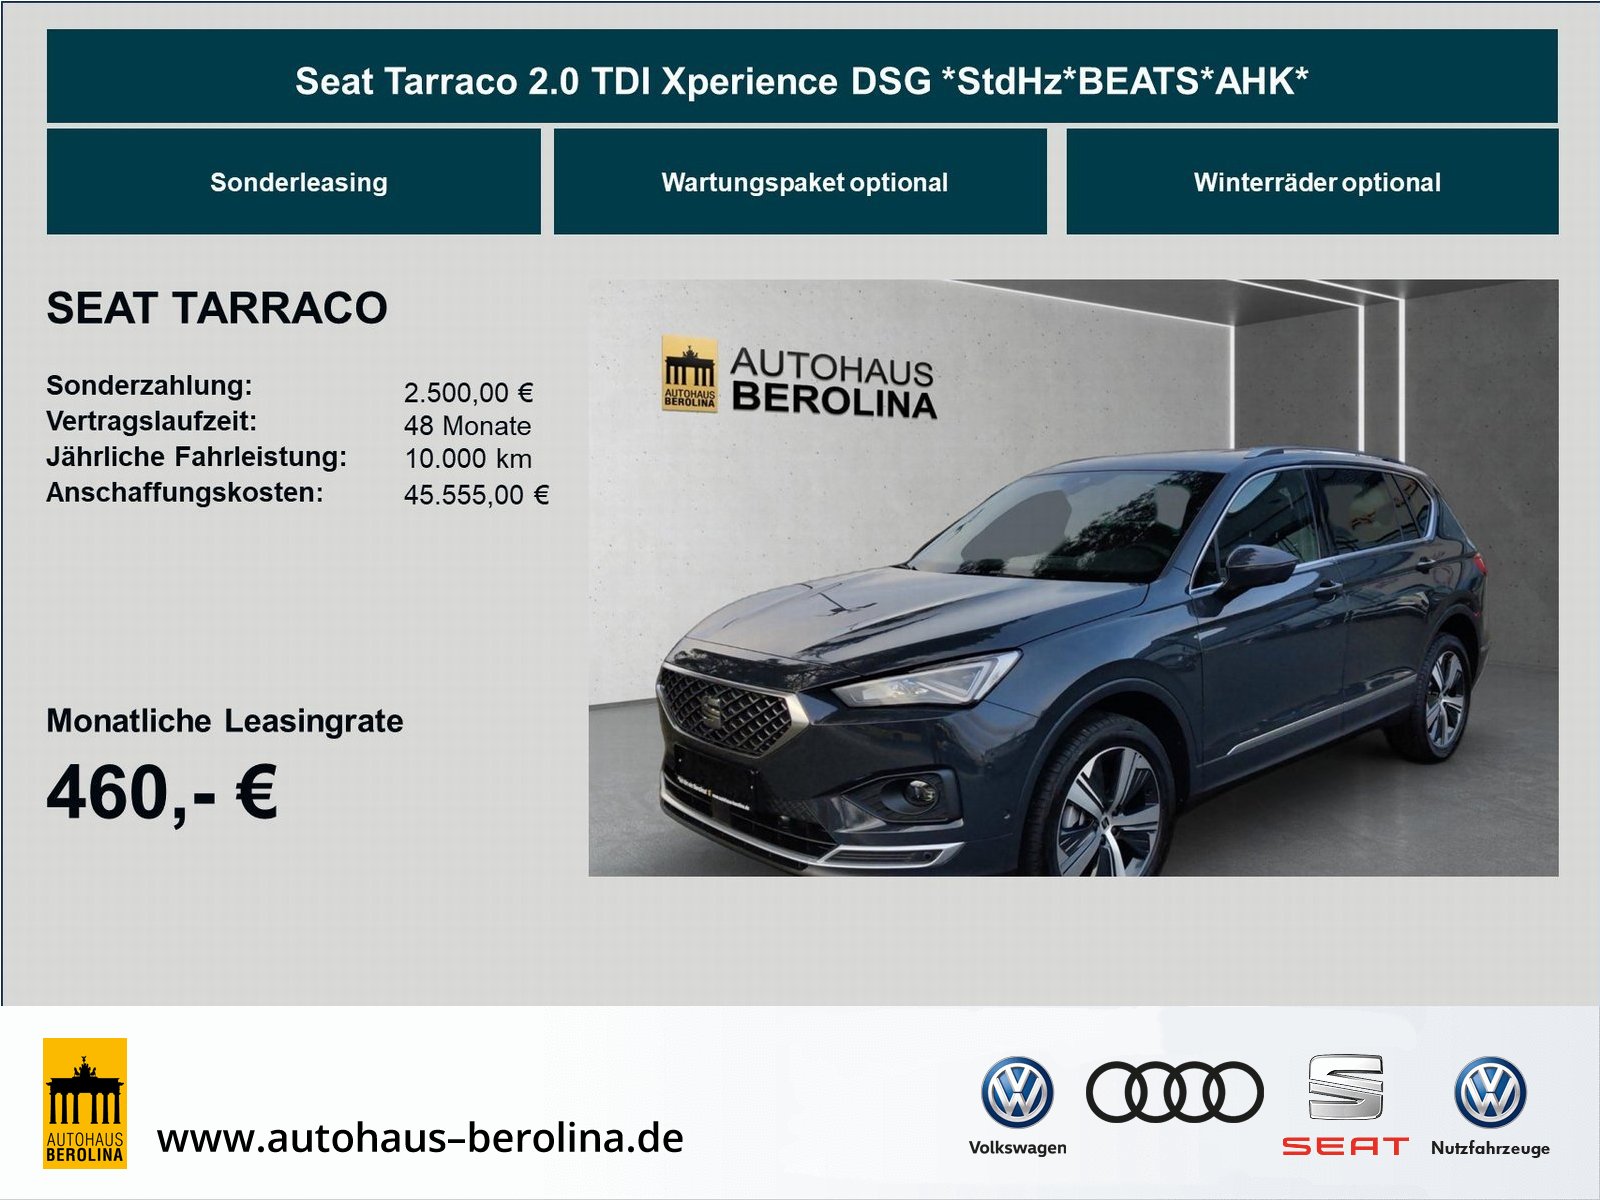 Seat Tarraco 2.0 TDI Xperience BEATS